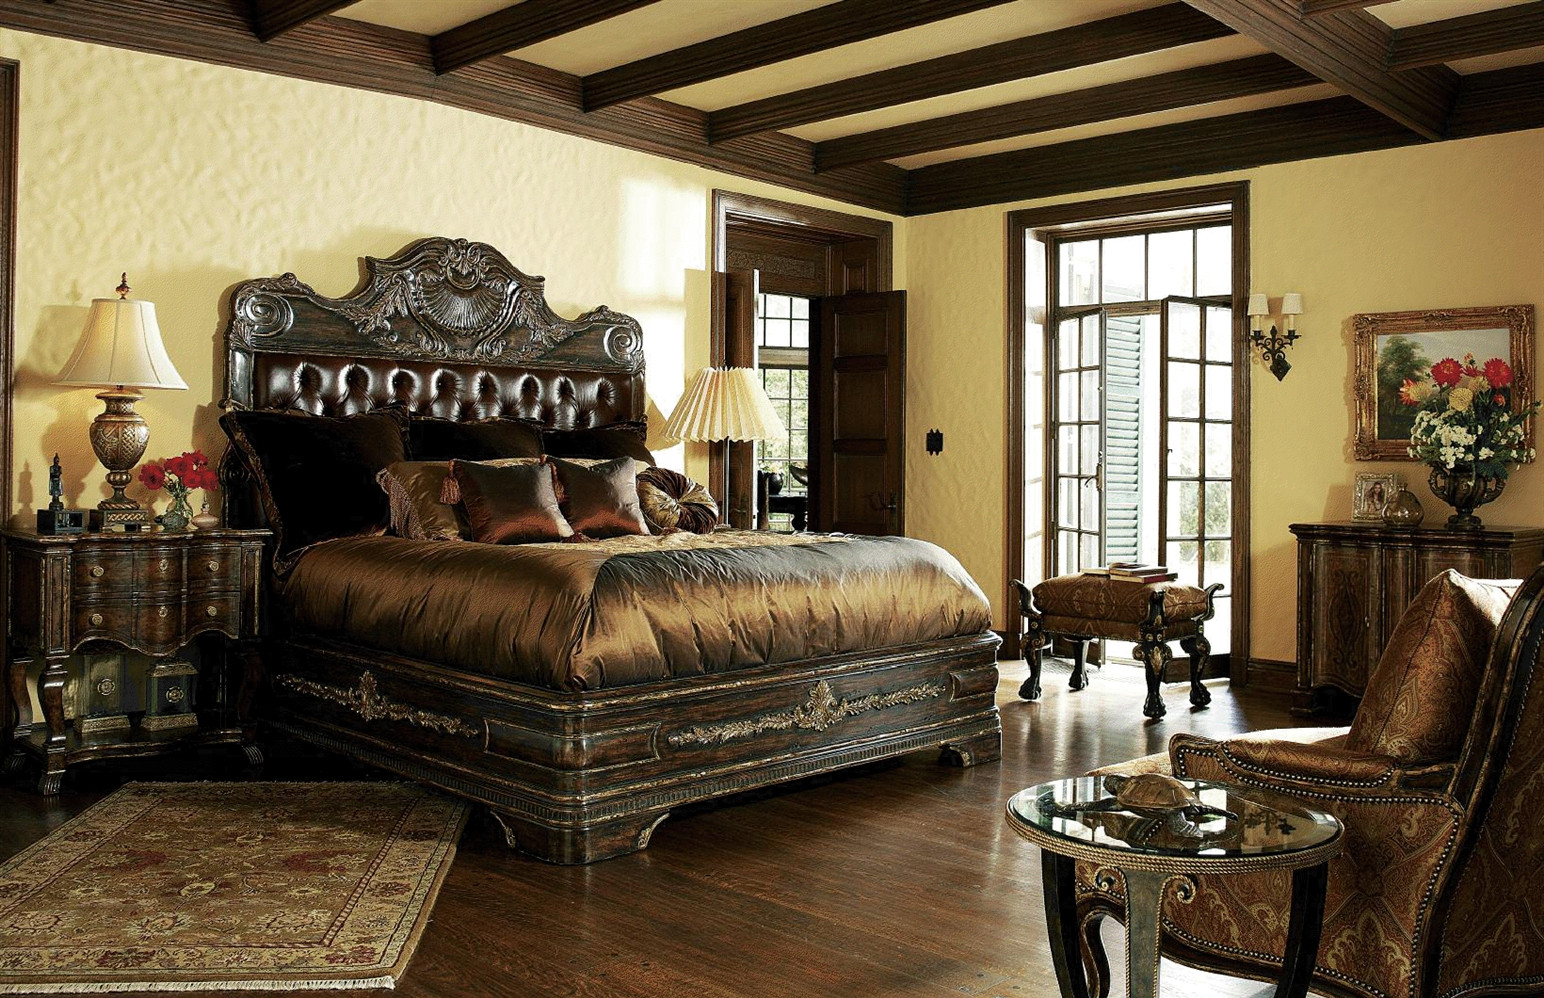 Master Bedroom Sets King
 1 High end master bedroom set carvings and tufted leather